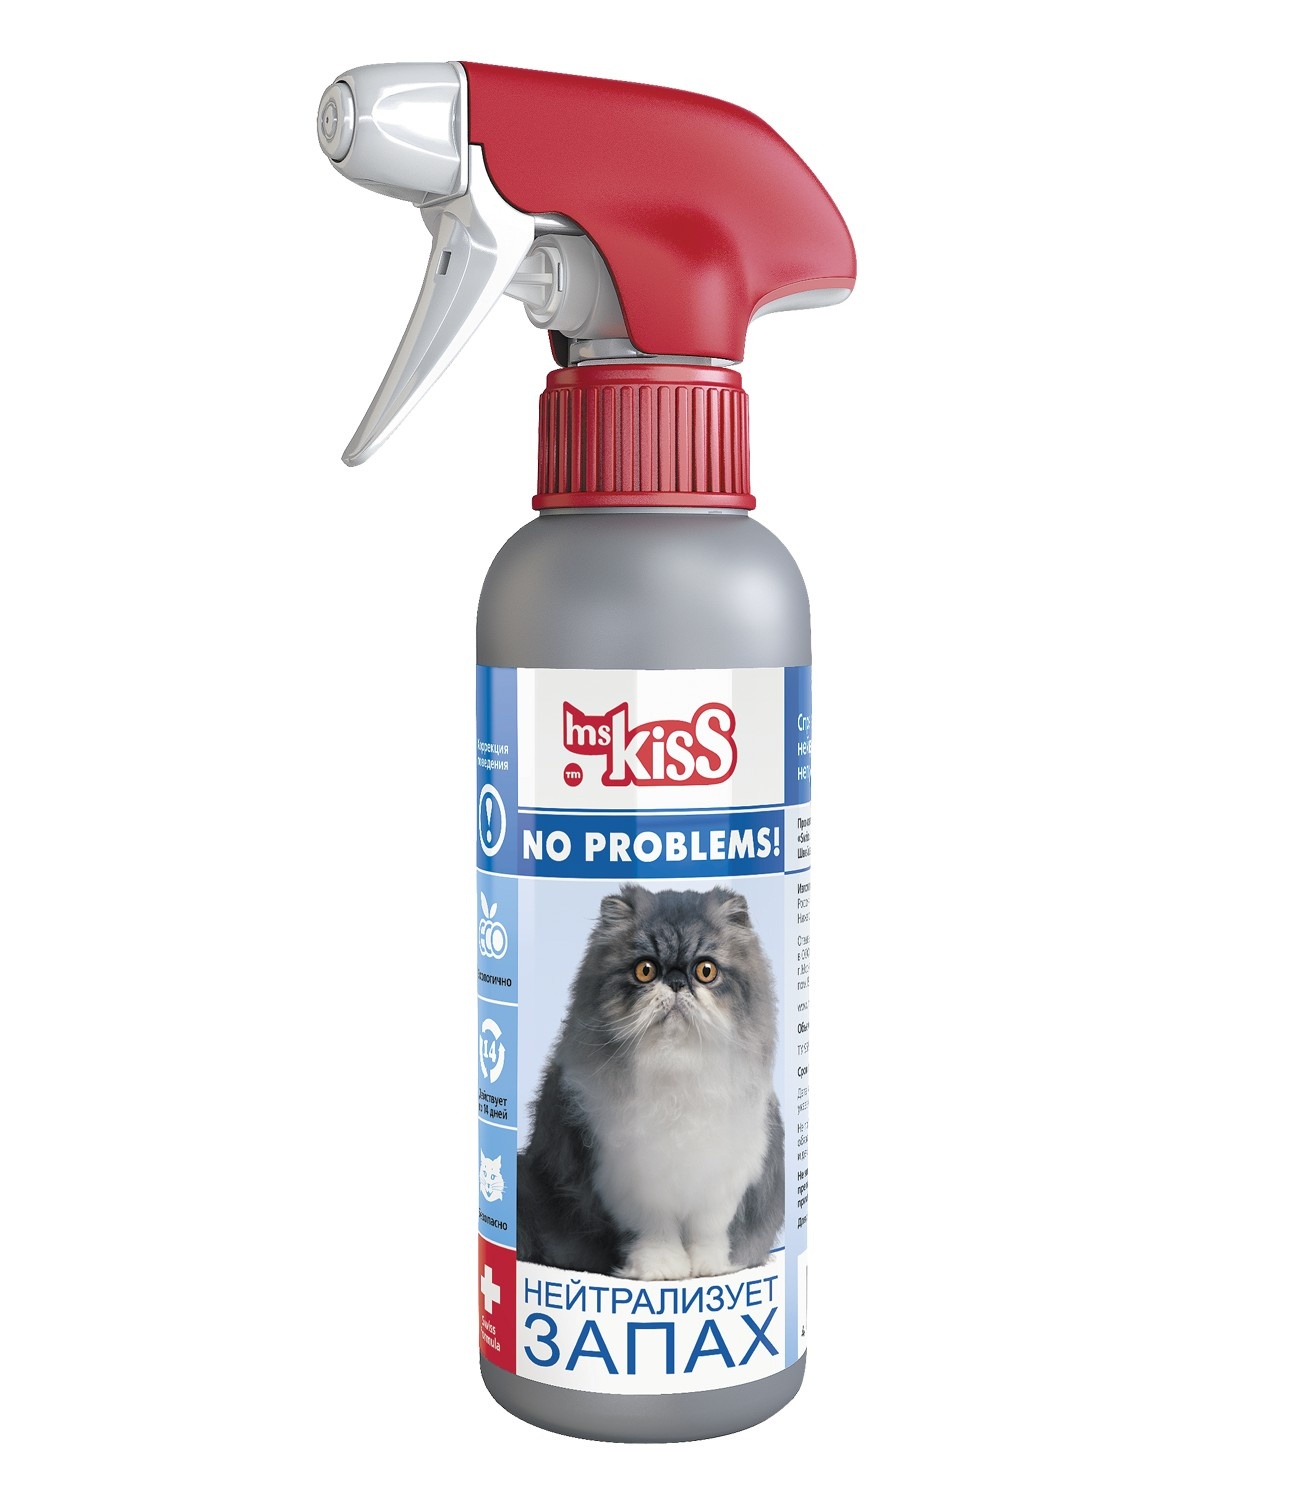 Ms.Kiss Ms.Kiss спрей No problems Нейтрализатор запаха для кошек (200 г)